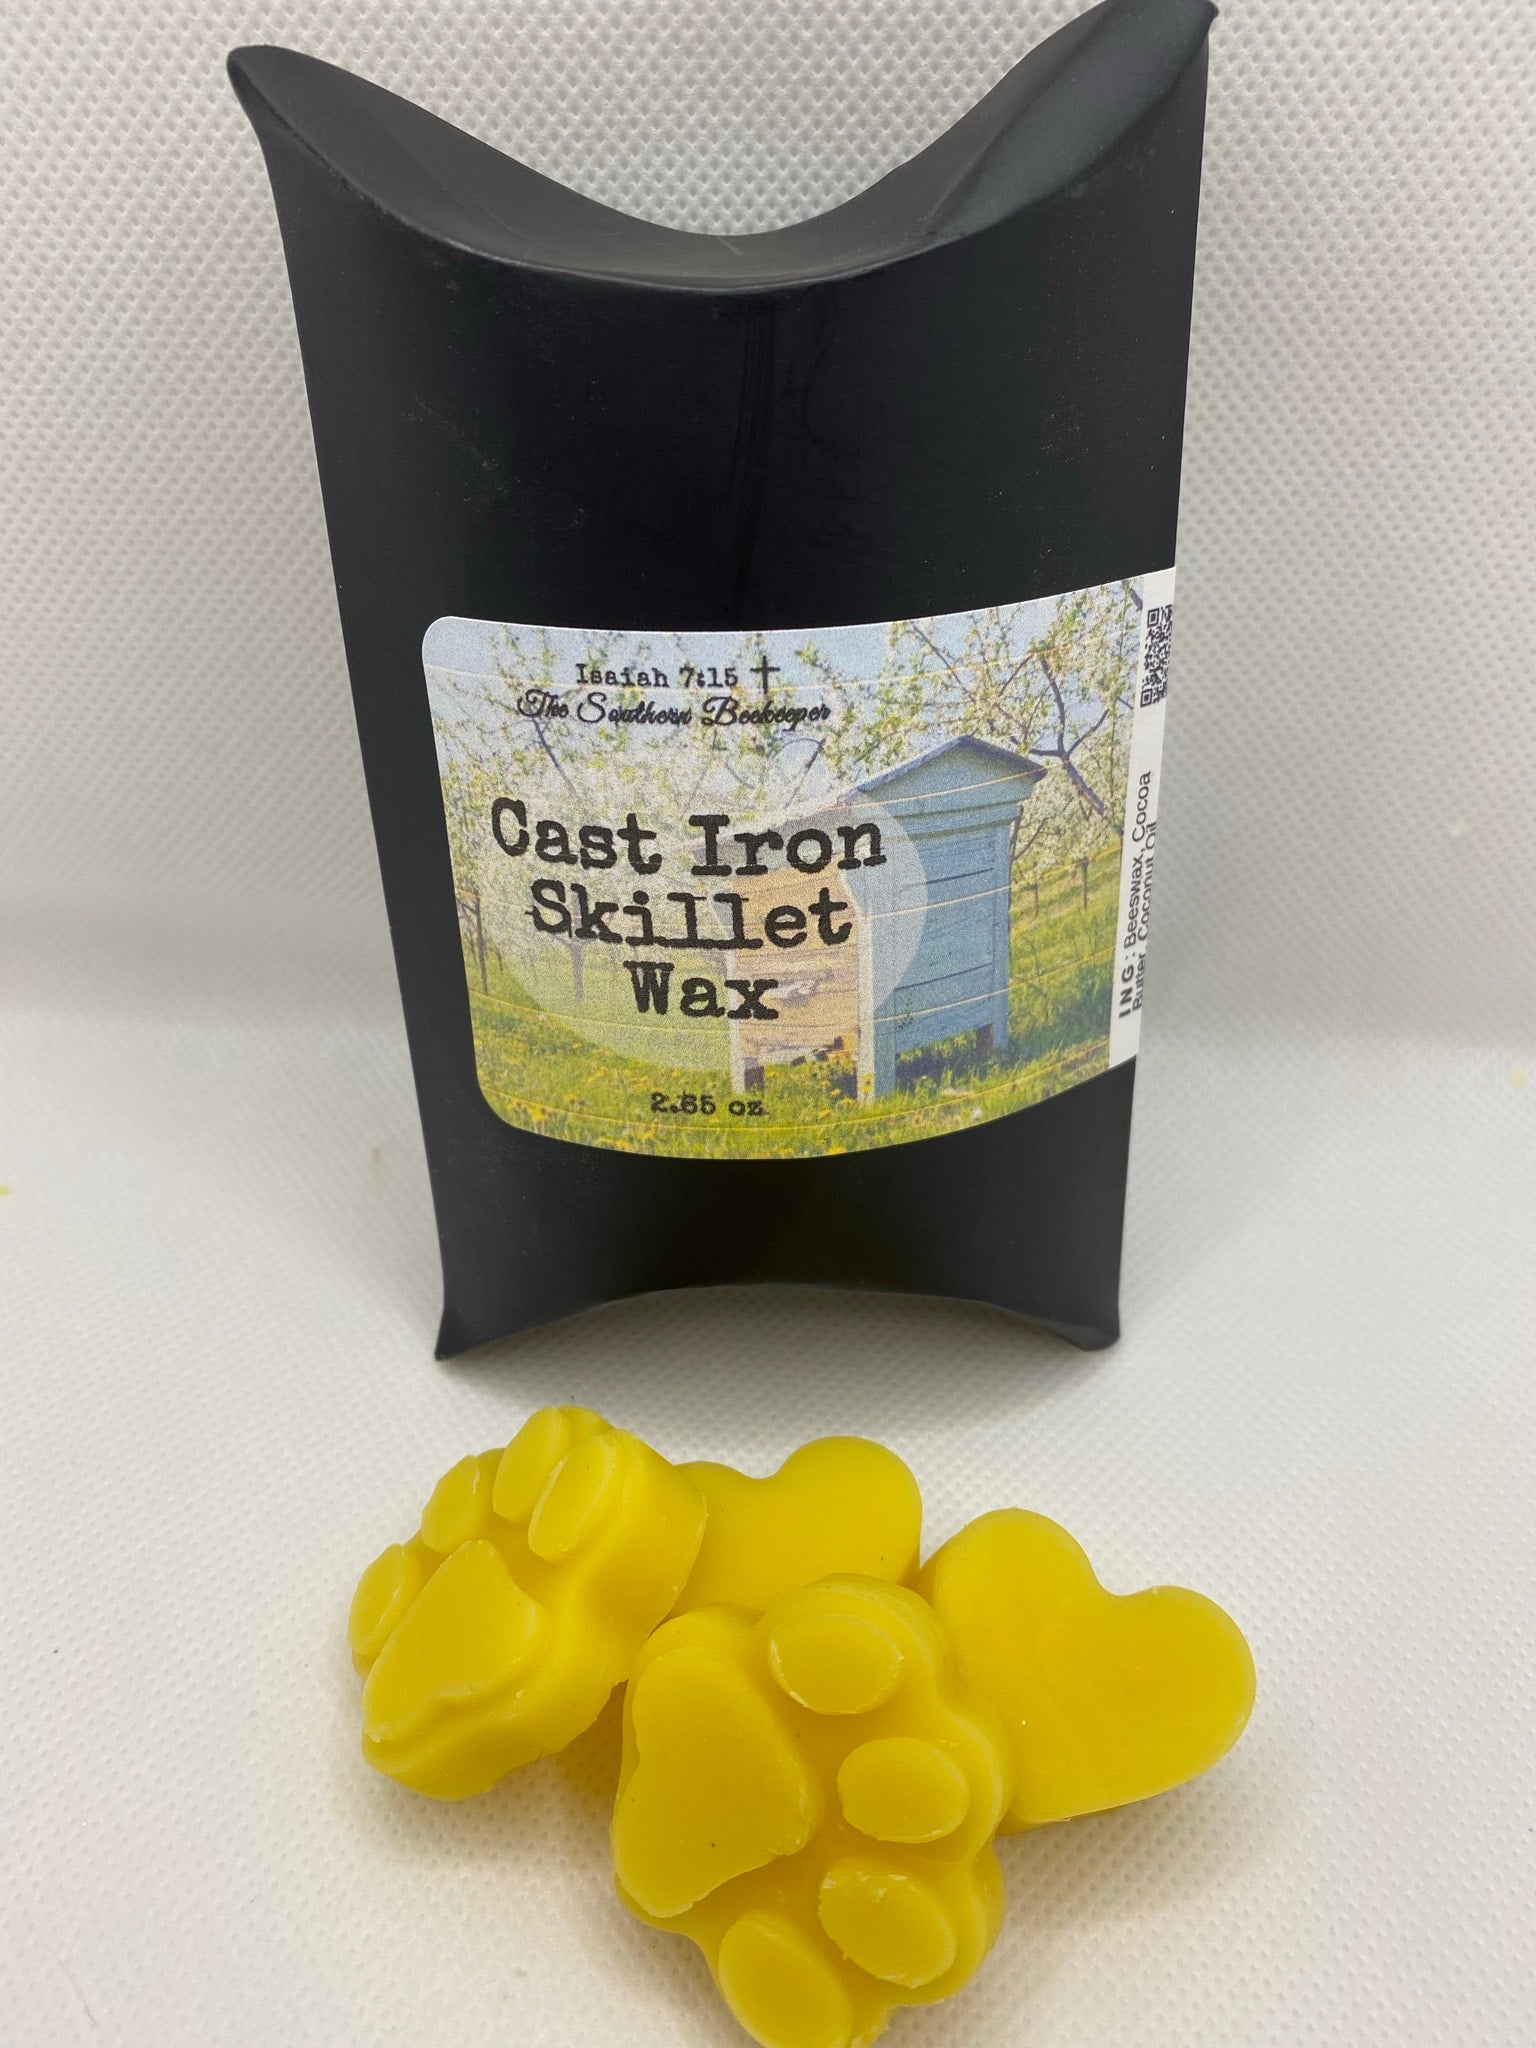 Cast Iron Seasoning Wax (Grapeseed, Sunflower, Beeswax)